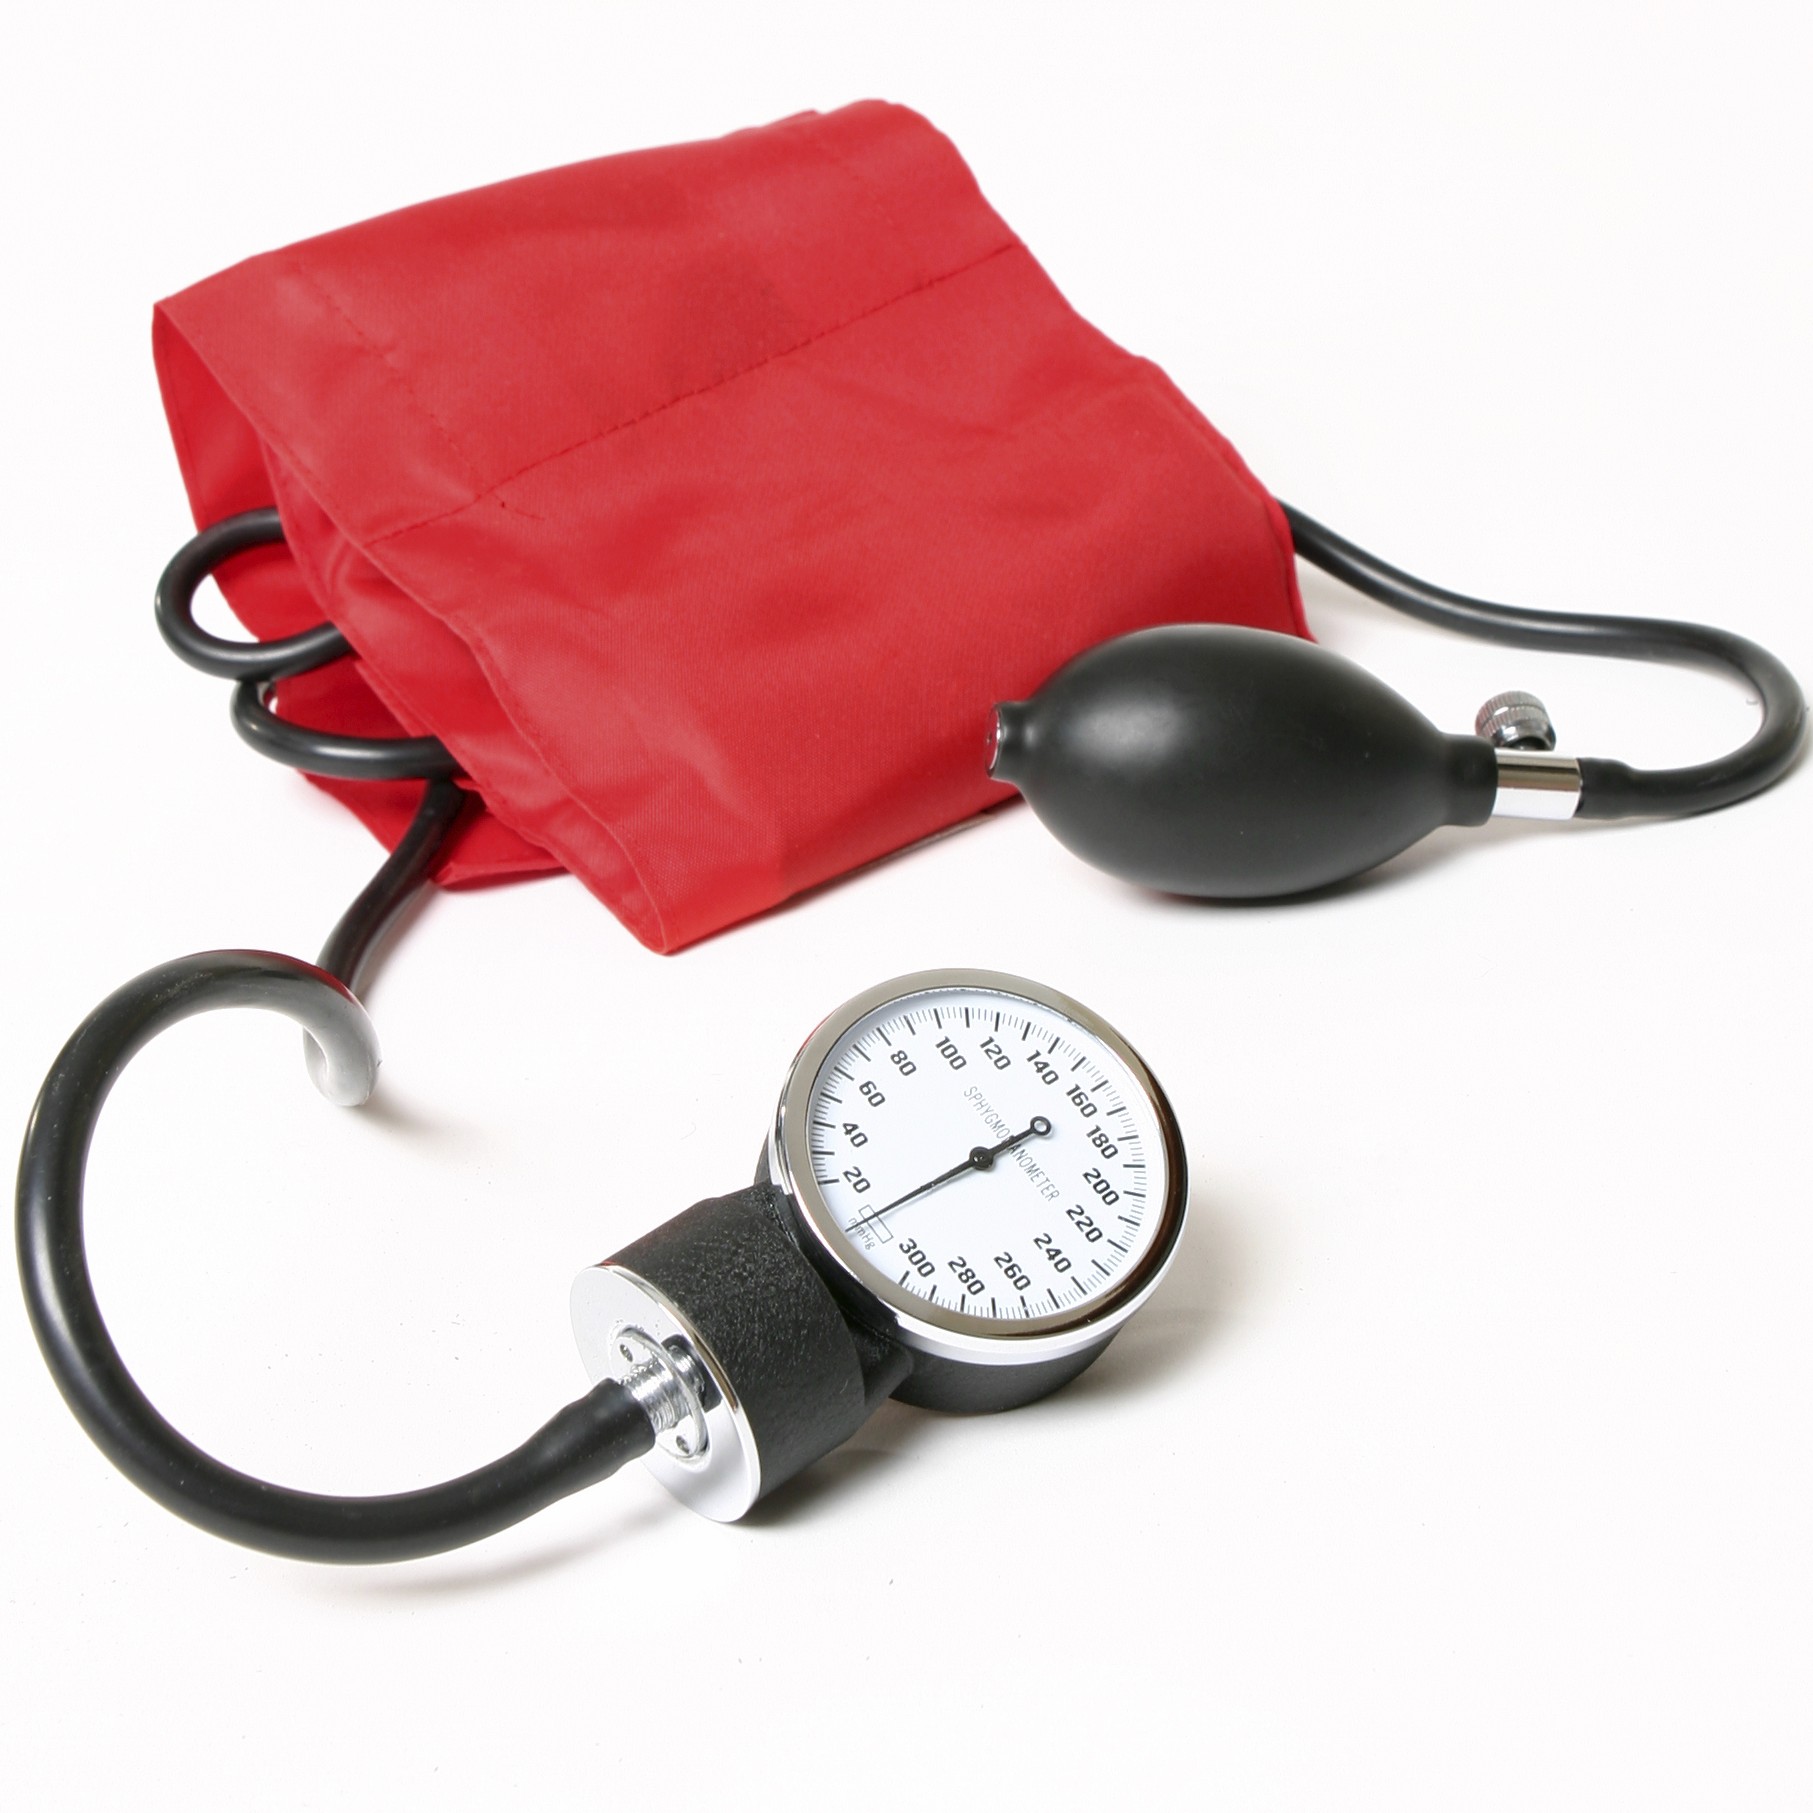 free clipart of blood pressure cuff - photo #7